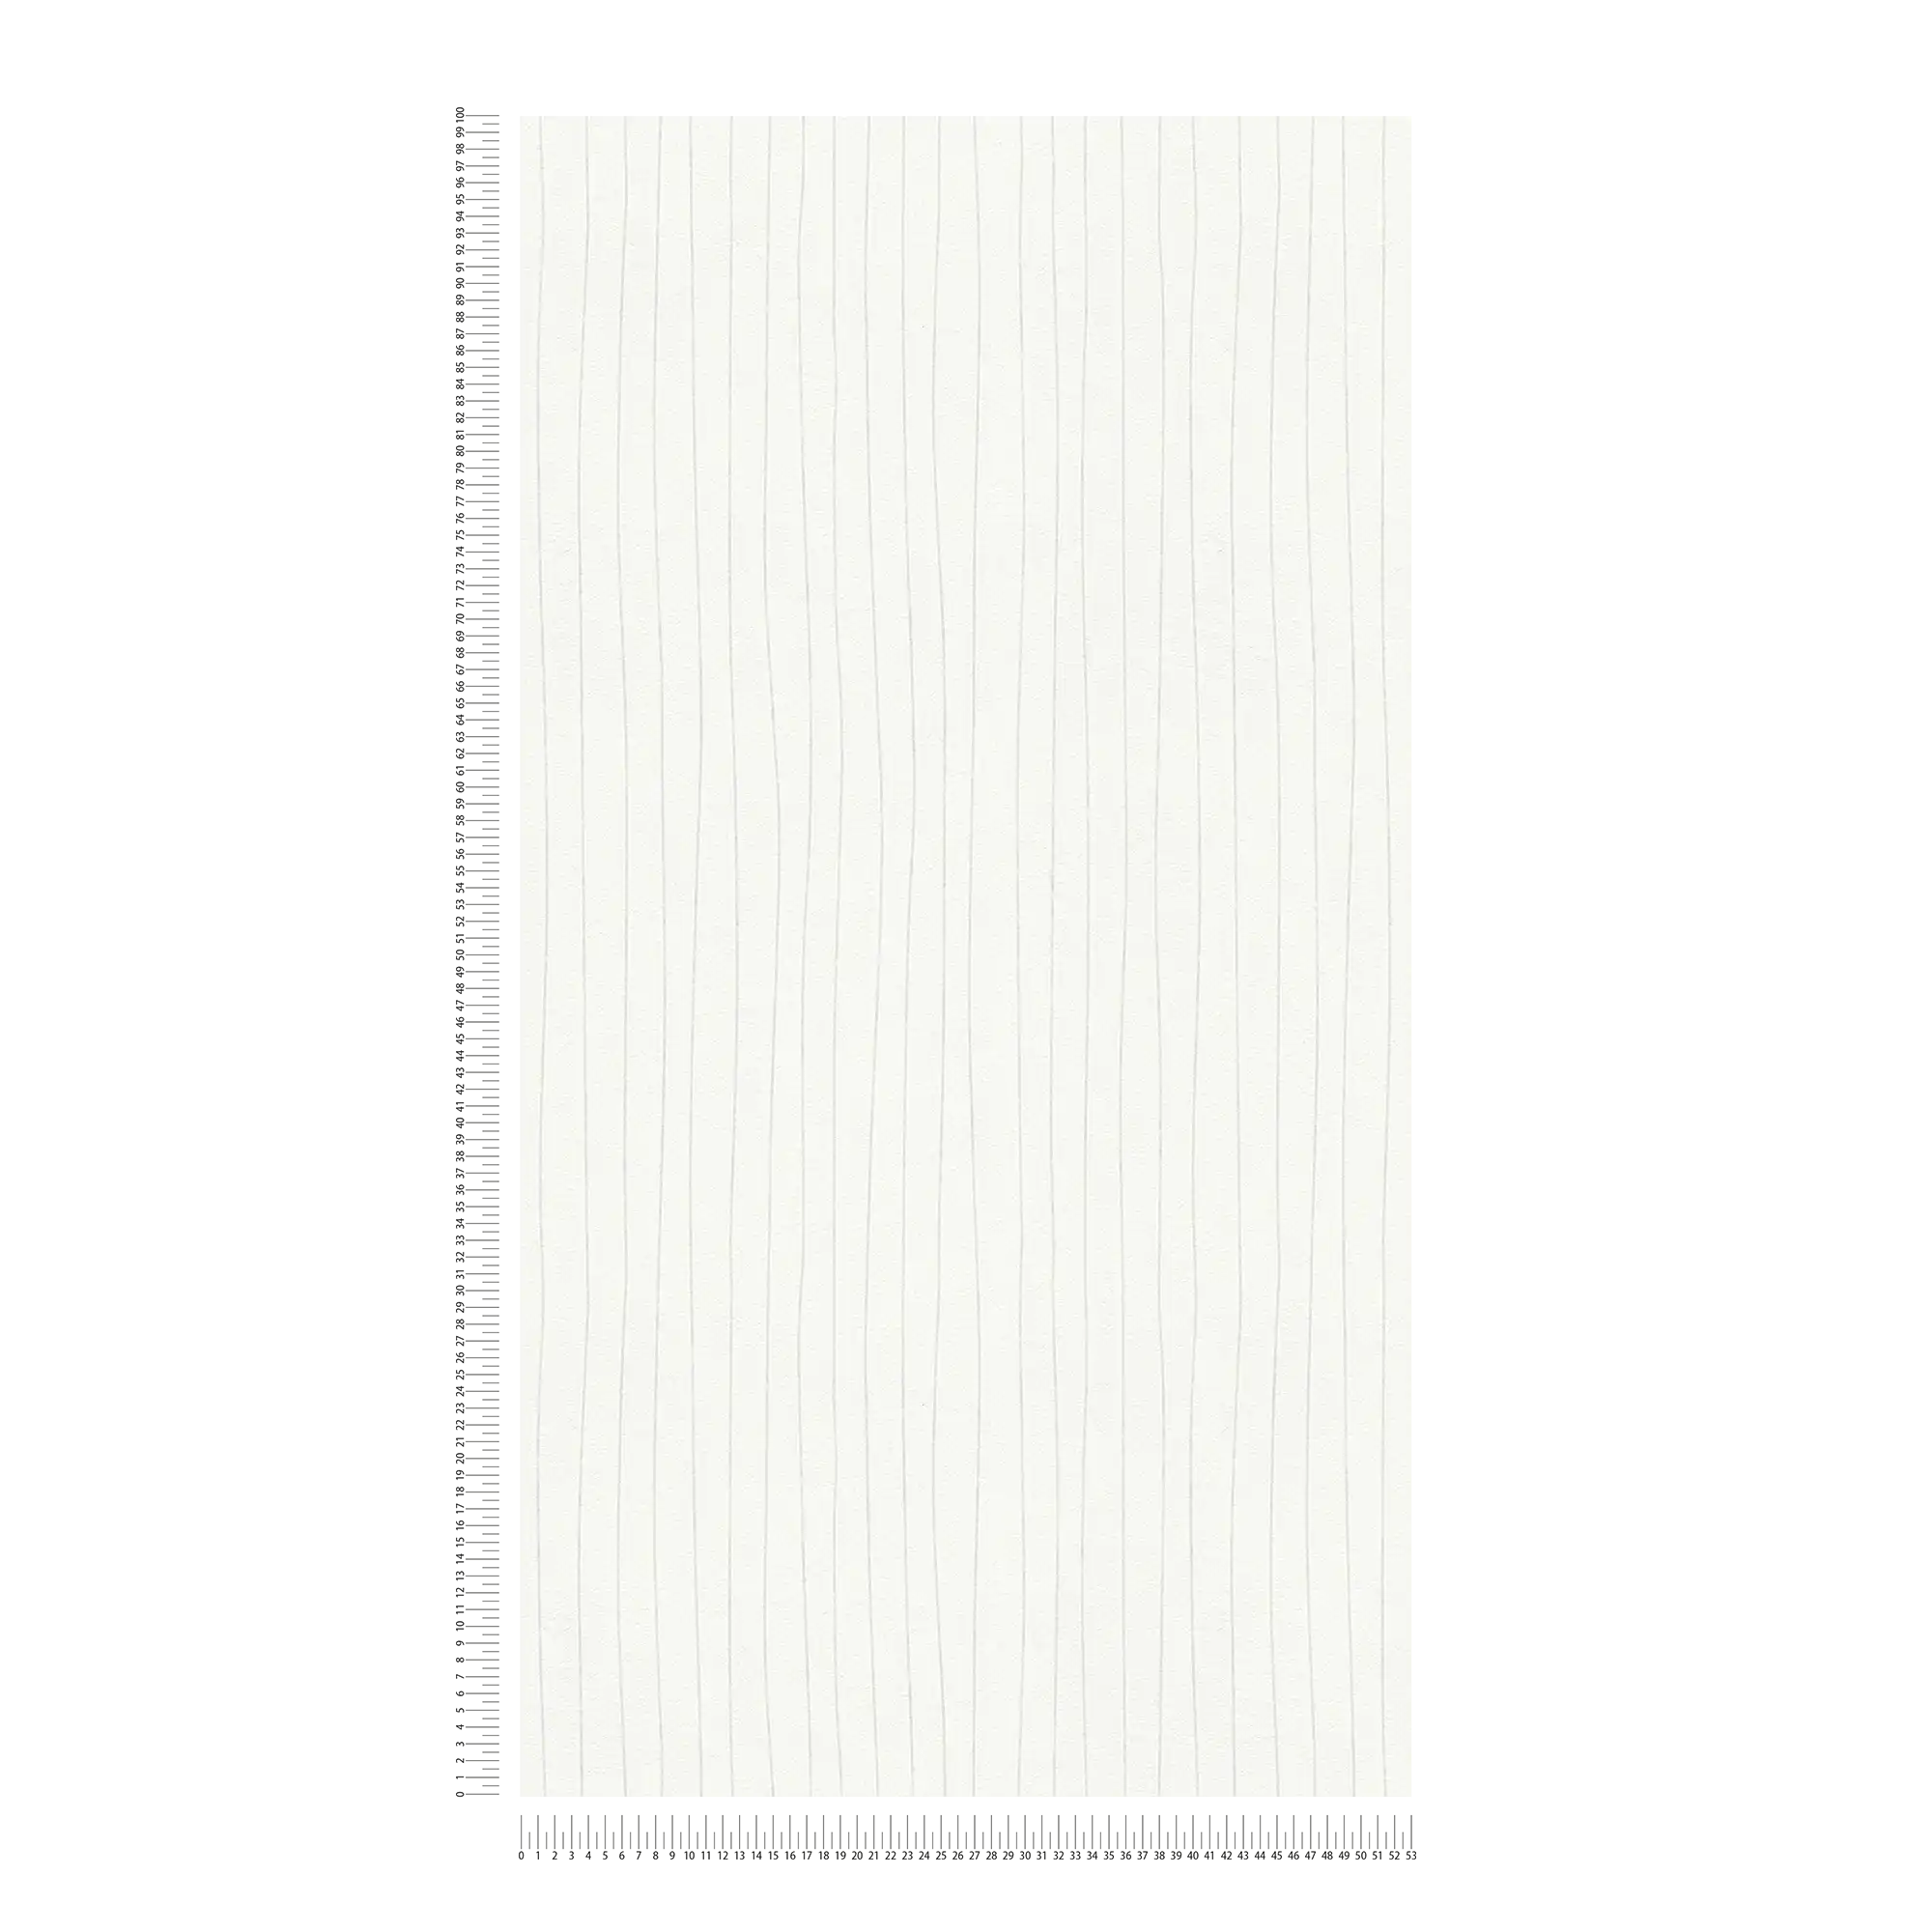             Carta da parati verniciabile con design a linee verticali - Bianco
        